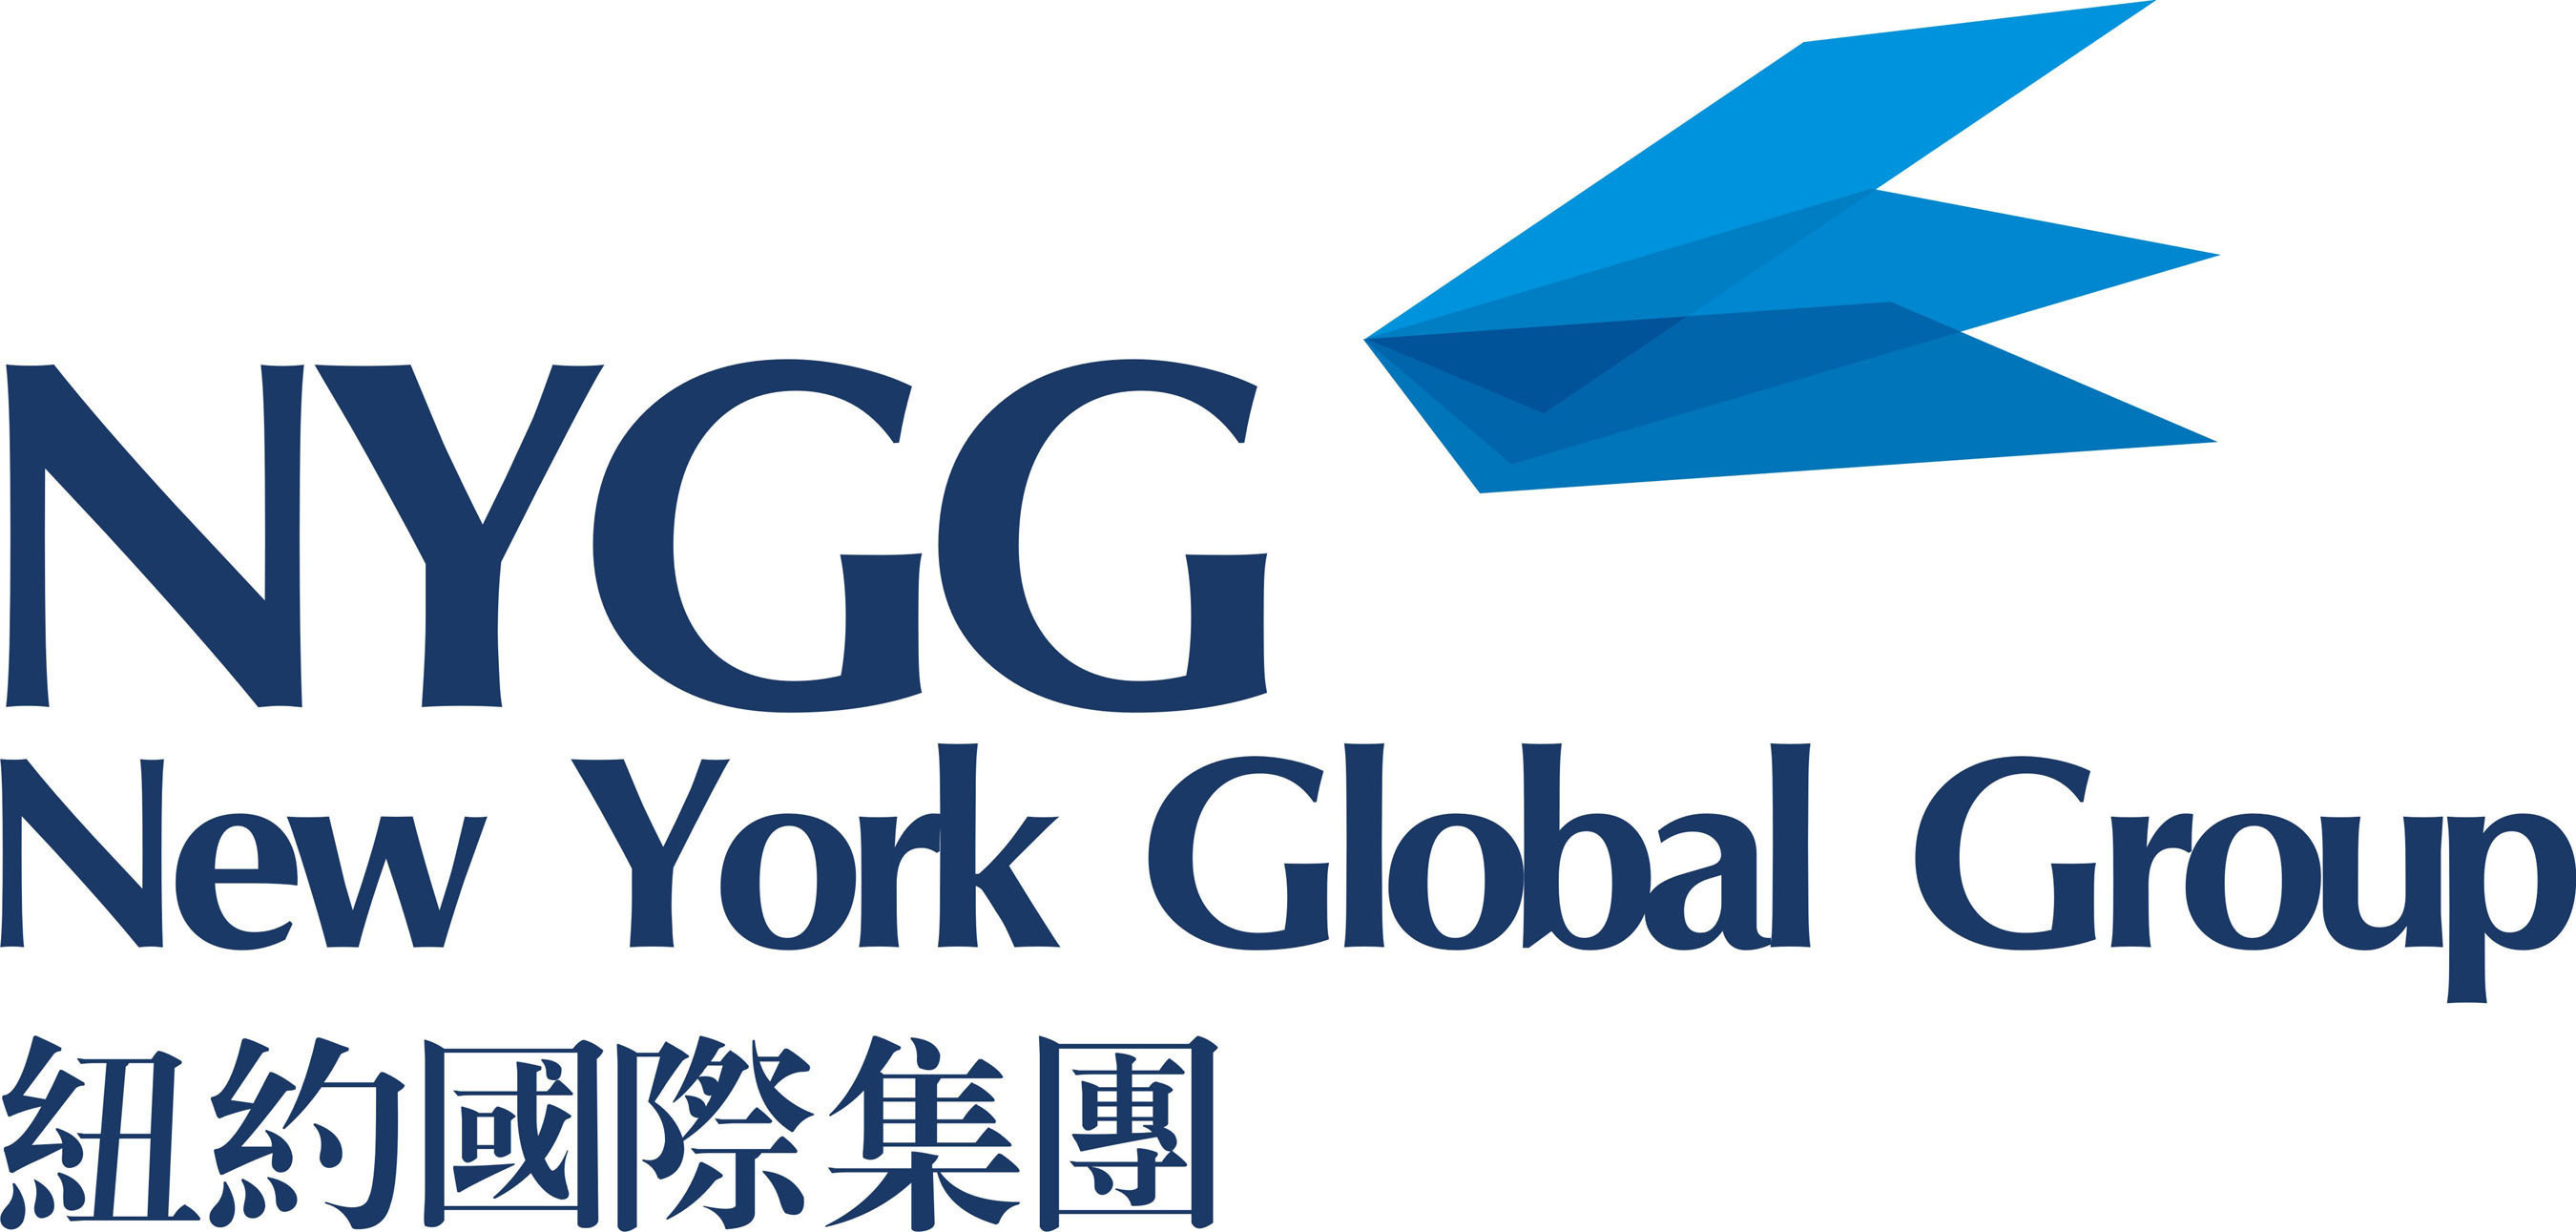 New York Global Group Logo. (PRNewsFoto/New York Global Group) (PRNewsFoto/)